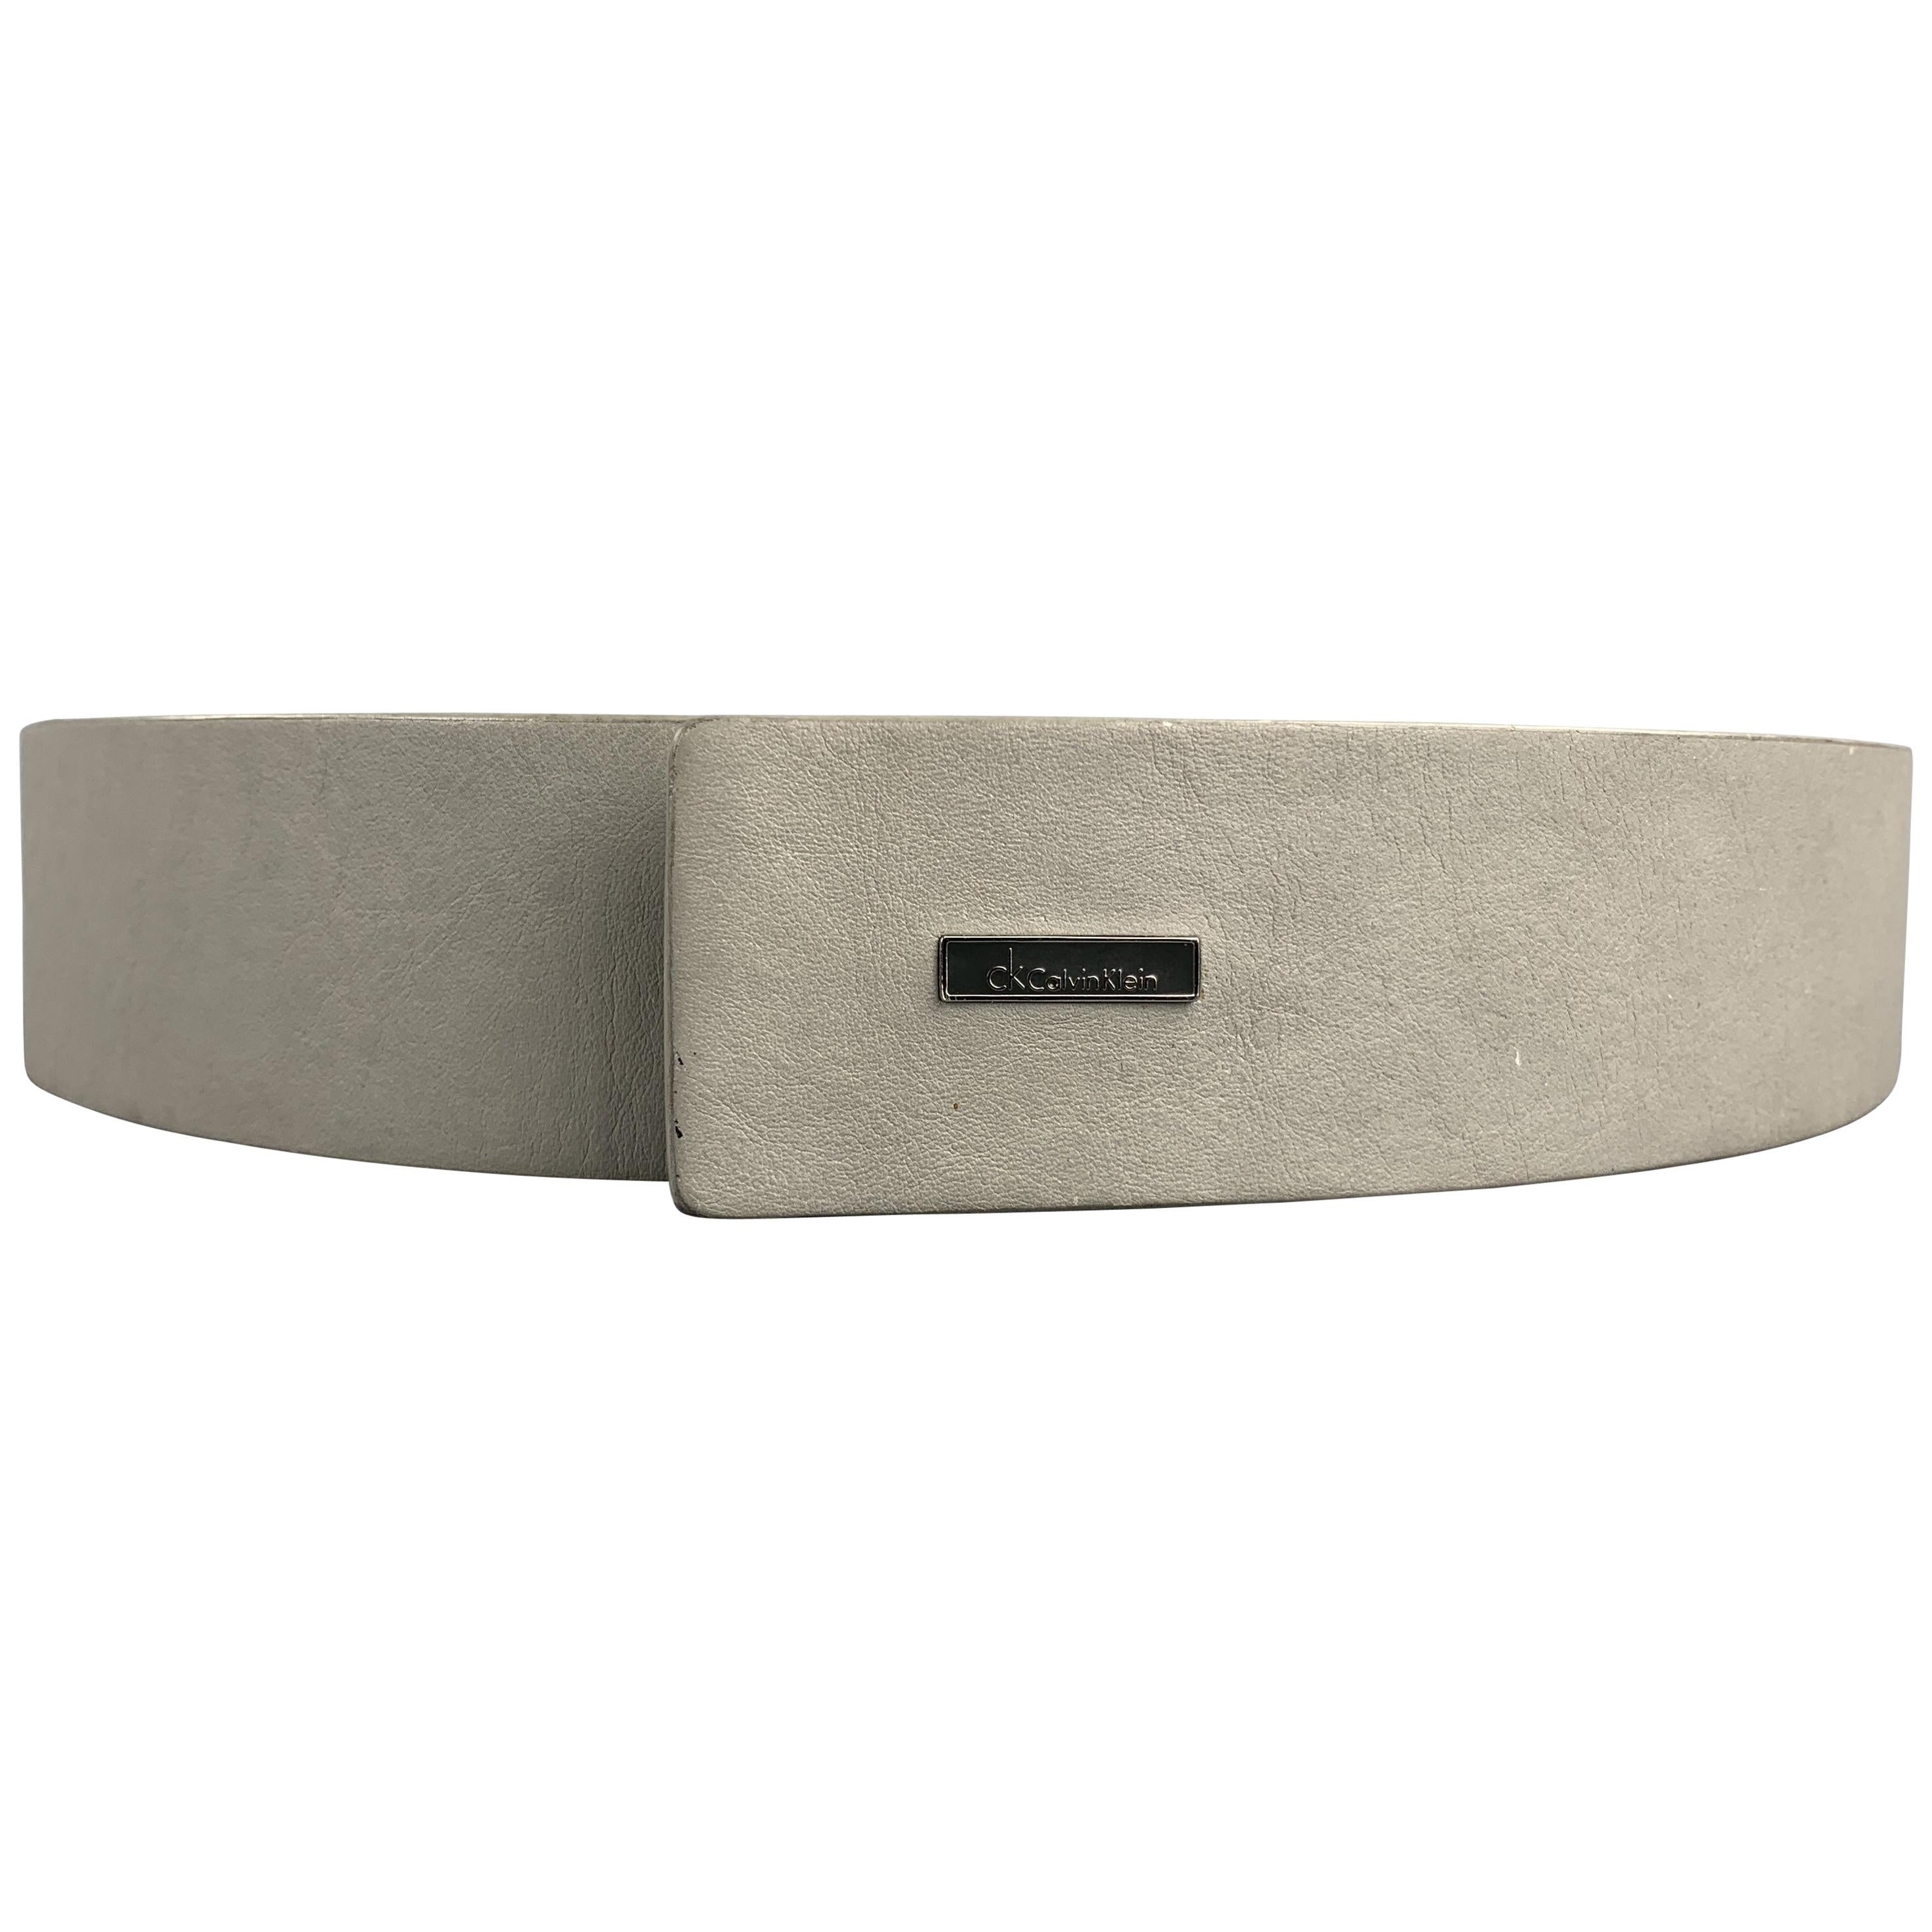 CALVIN KLEIN Size 32 Light Gray Leather Belt